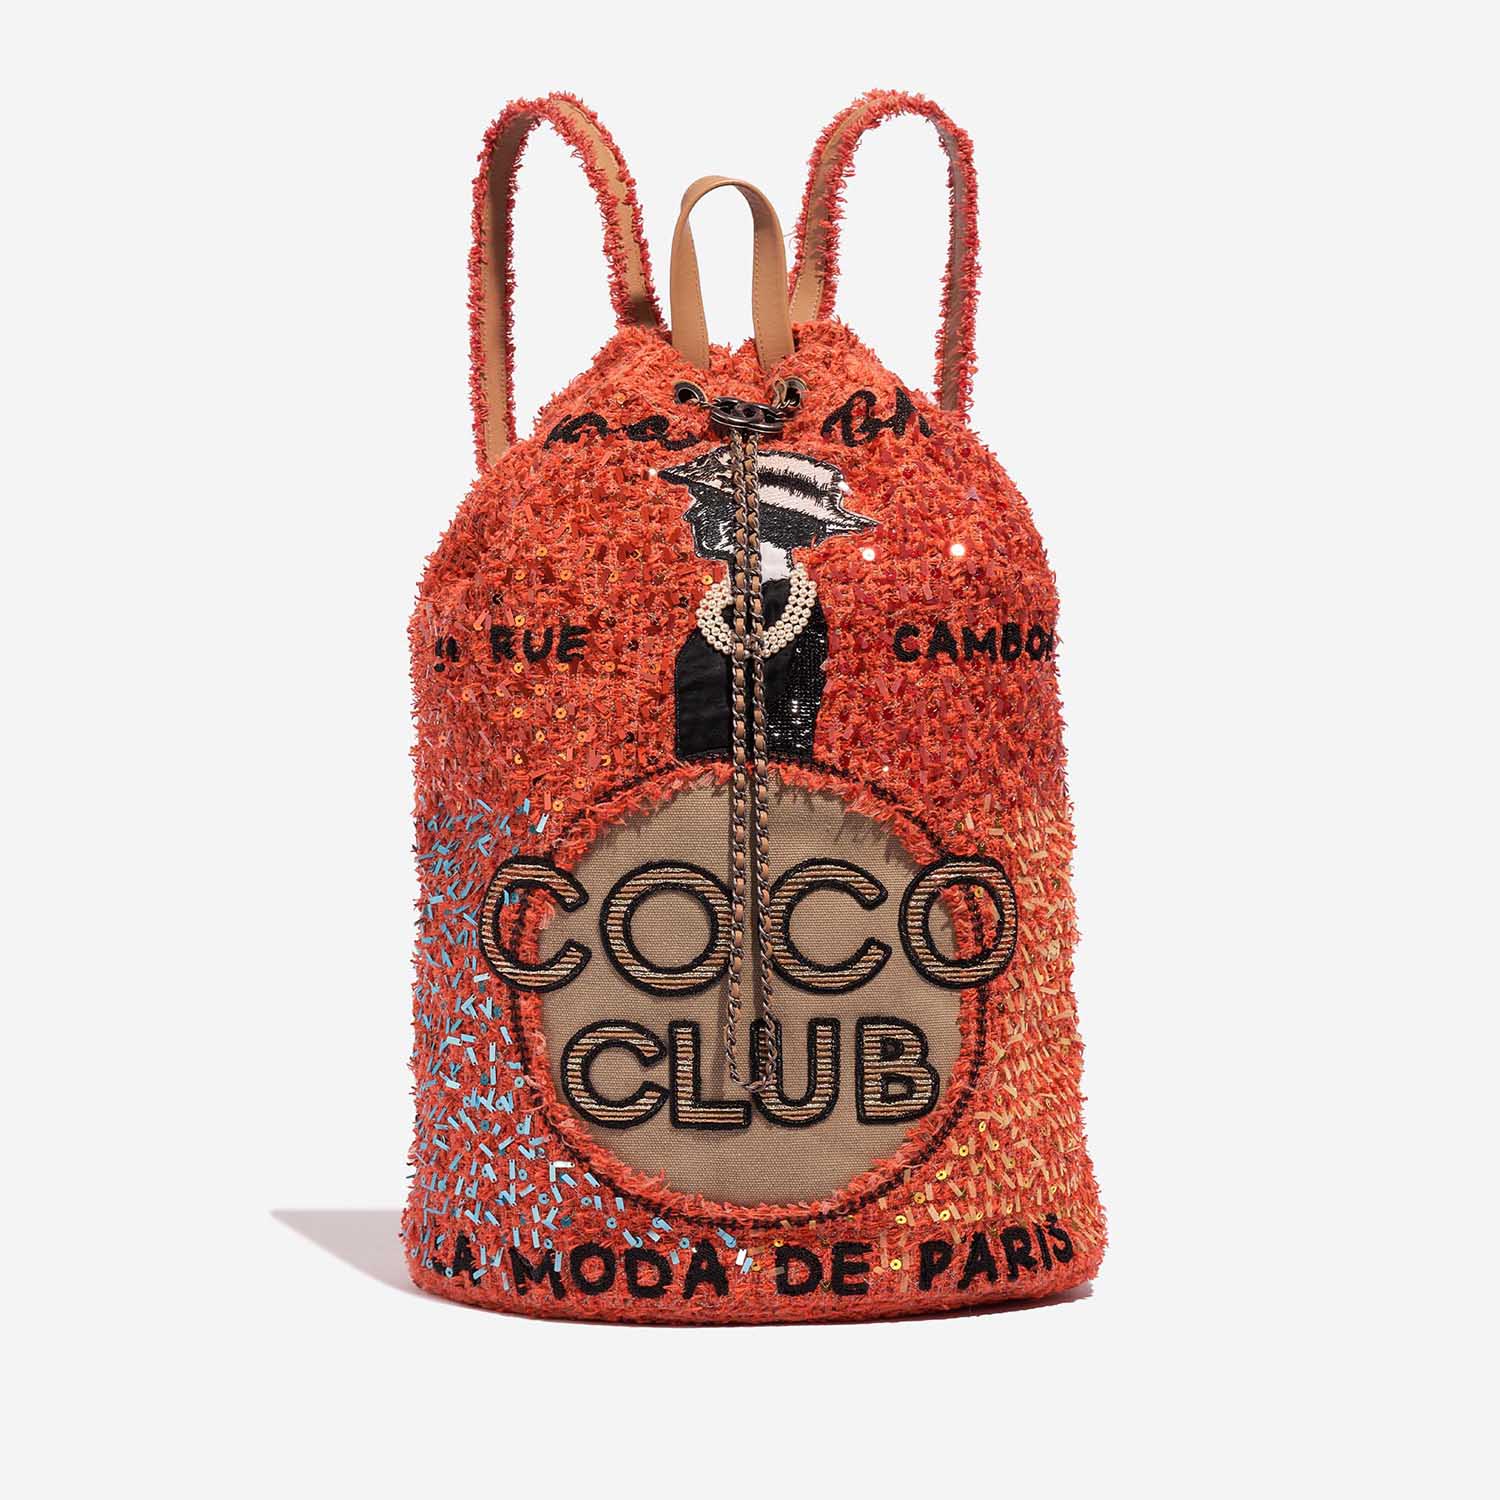 Pre-owned Chanel bag Coco Club Backpack Tweed / Canvas / Sequins Orange / Beige / Black Orange Front | Sell your designer bag on Saclab.com